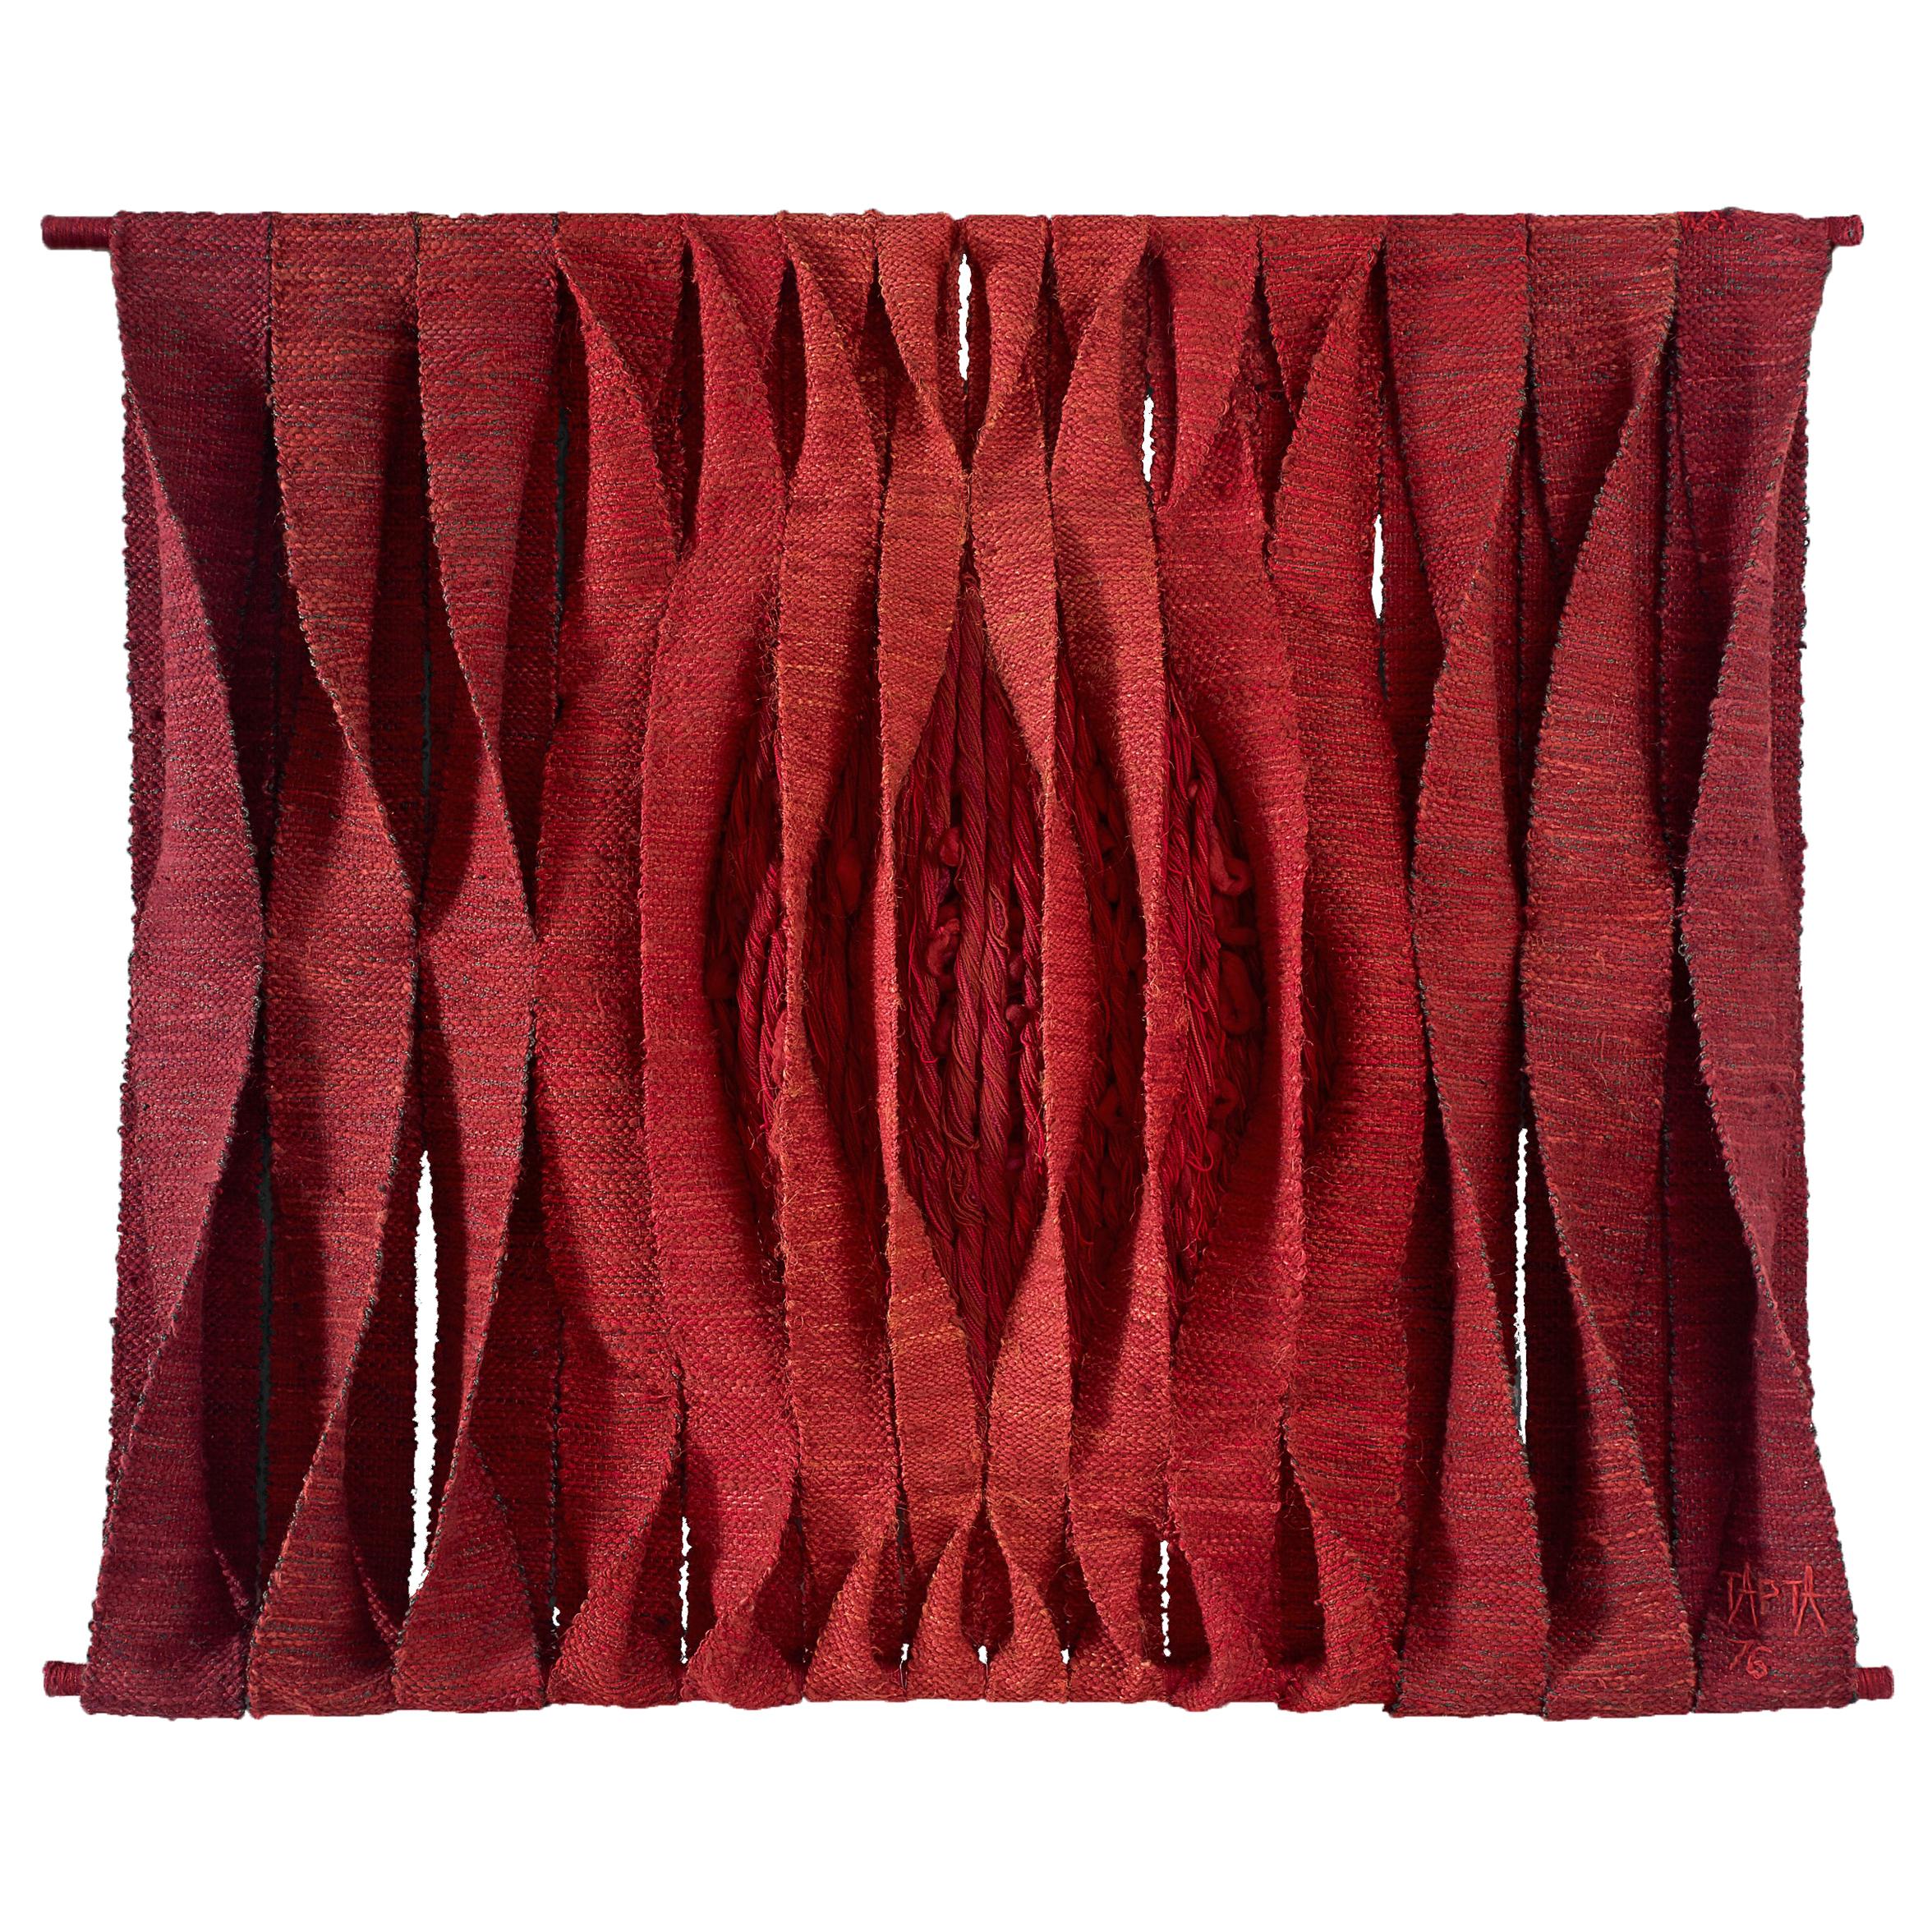 Maria Tapta Large Wall Sculpture in Red Textiles, Belgium, 1975